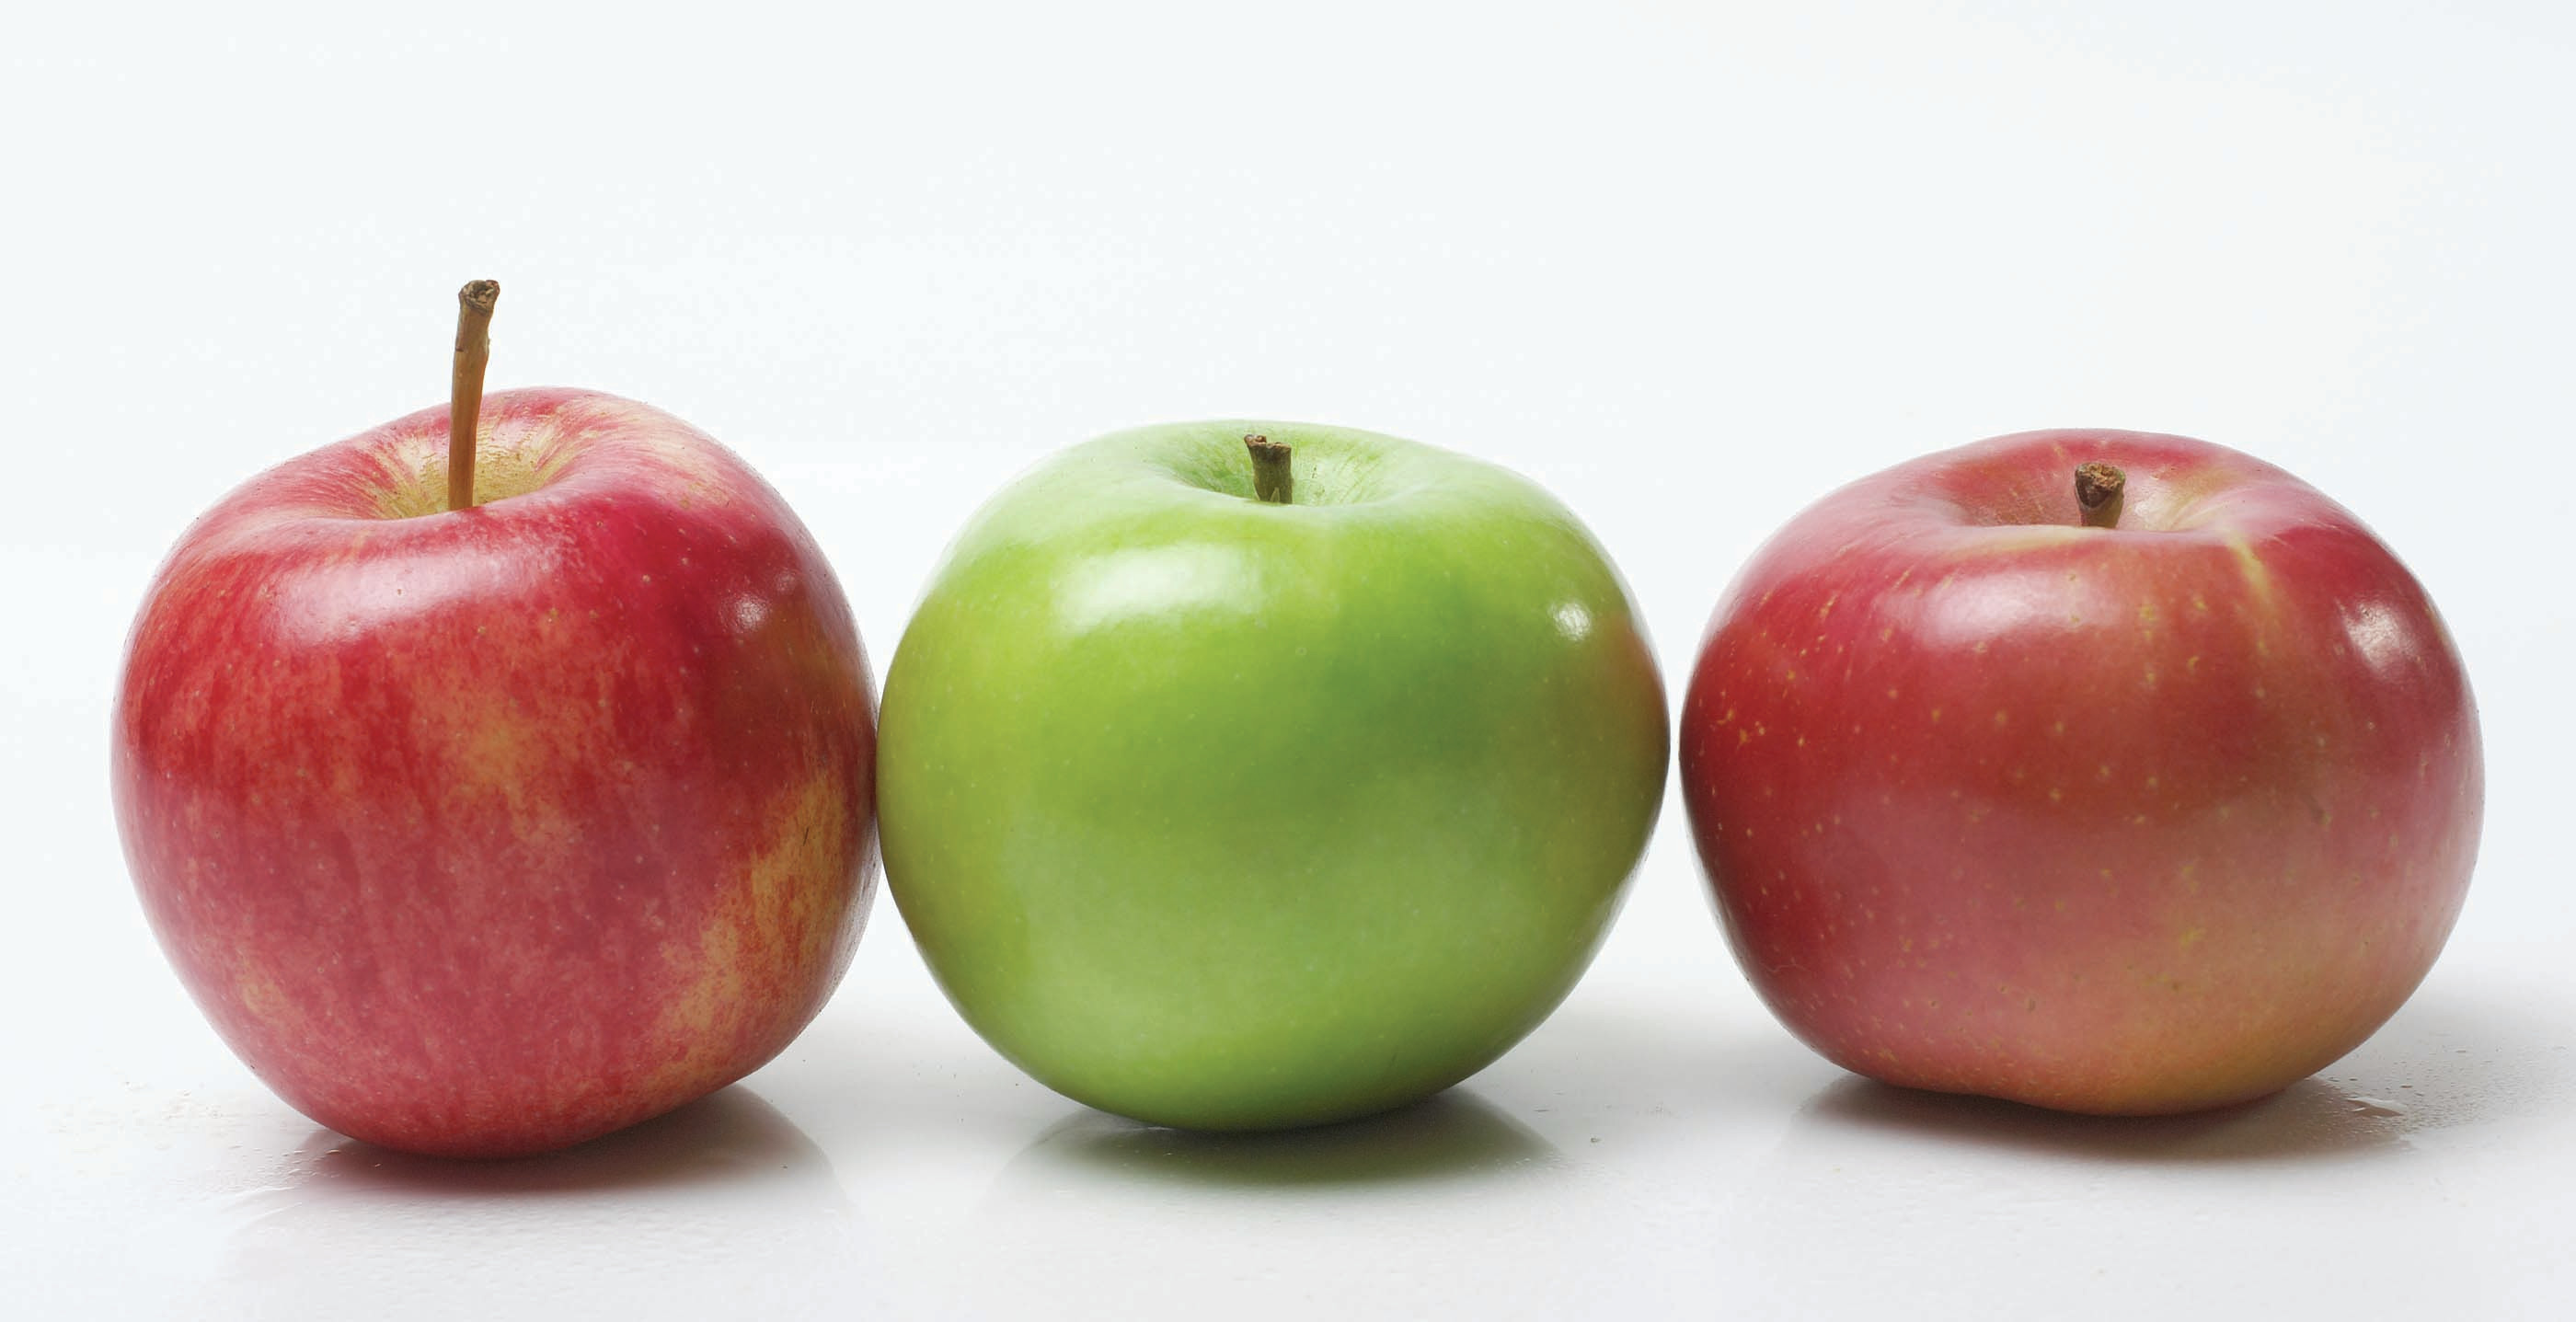 Apple three. Разные яблоки. Три яблока. Три разных яблока. Яблоки разного цвета.